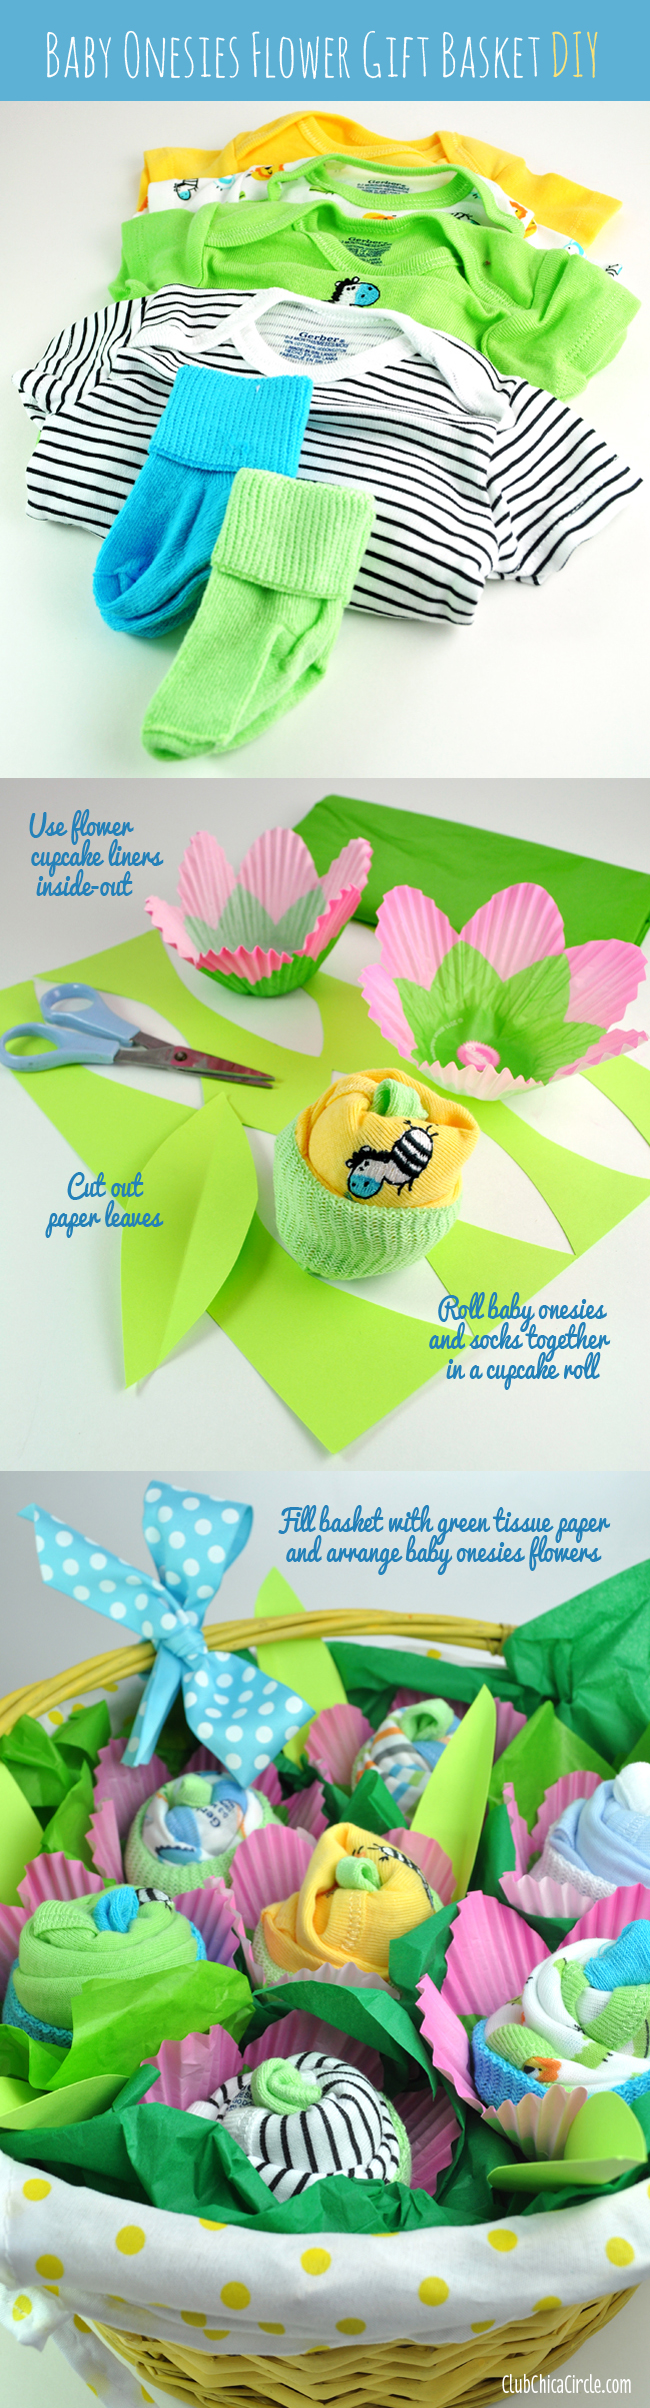 baby onesies for flower basket gift easy tutorial